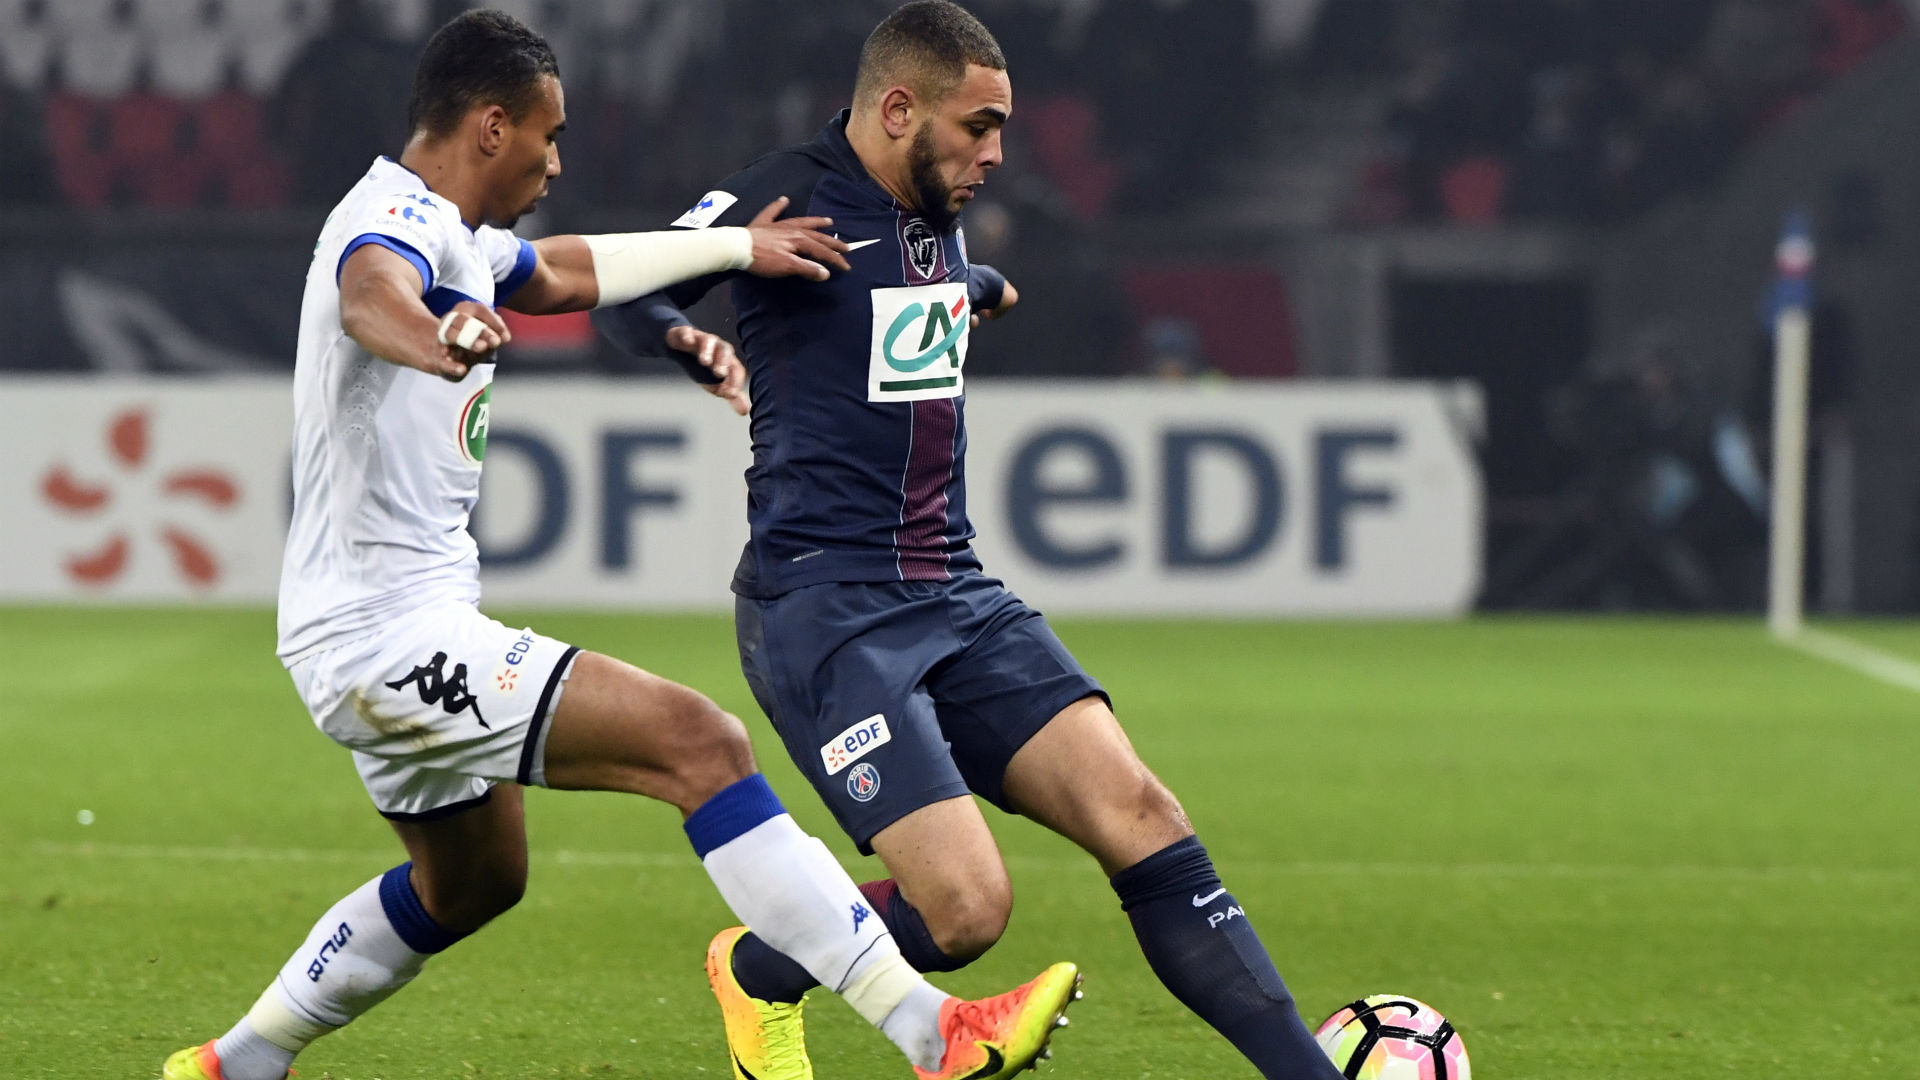 Ghana’s Djiku sees red as Messi-less PSG trash Strasbourg in Ligue 1 encounter